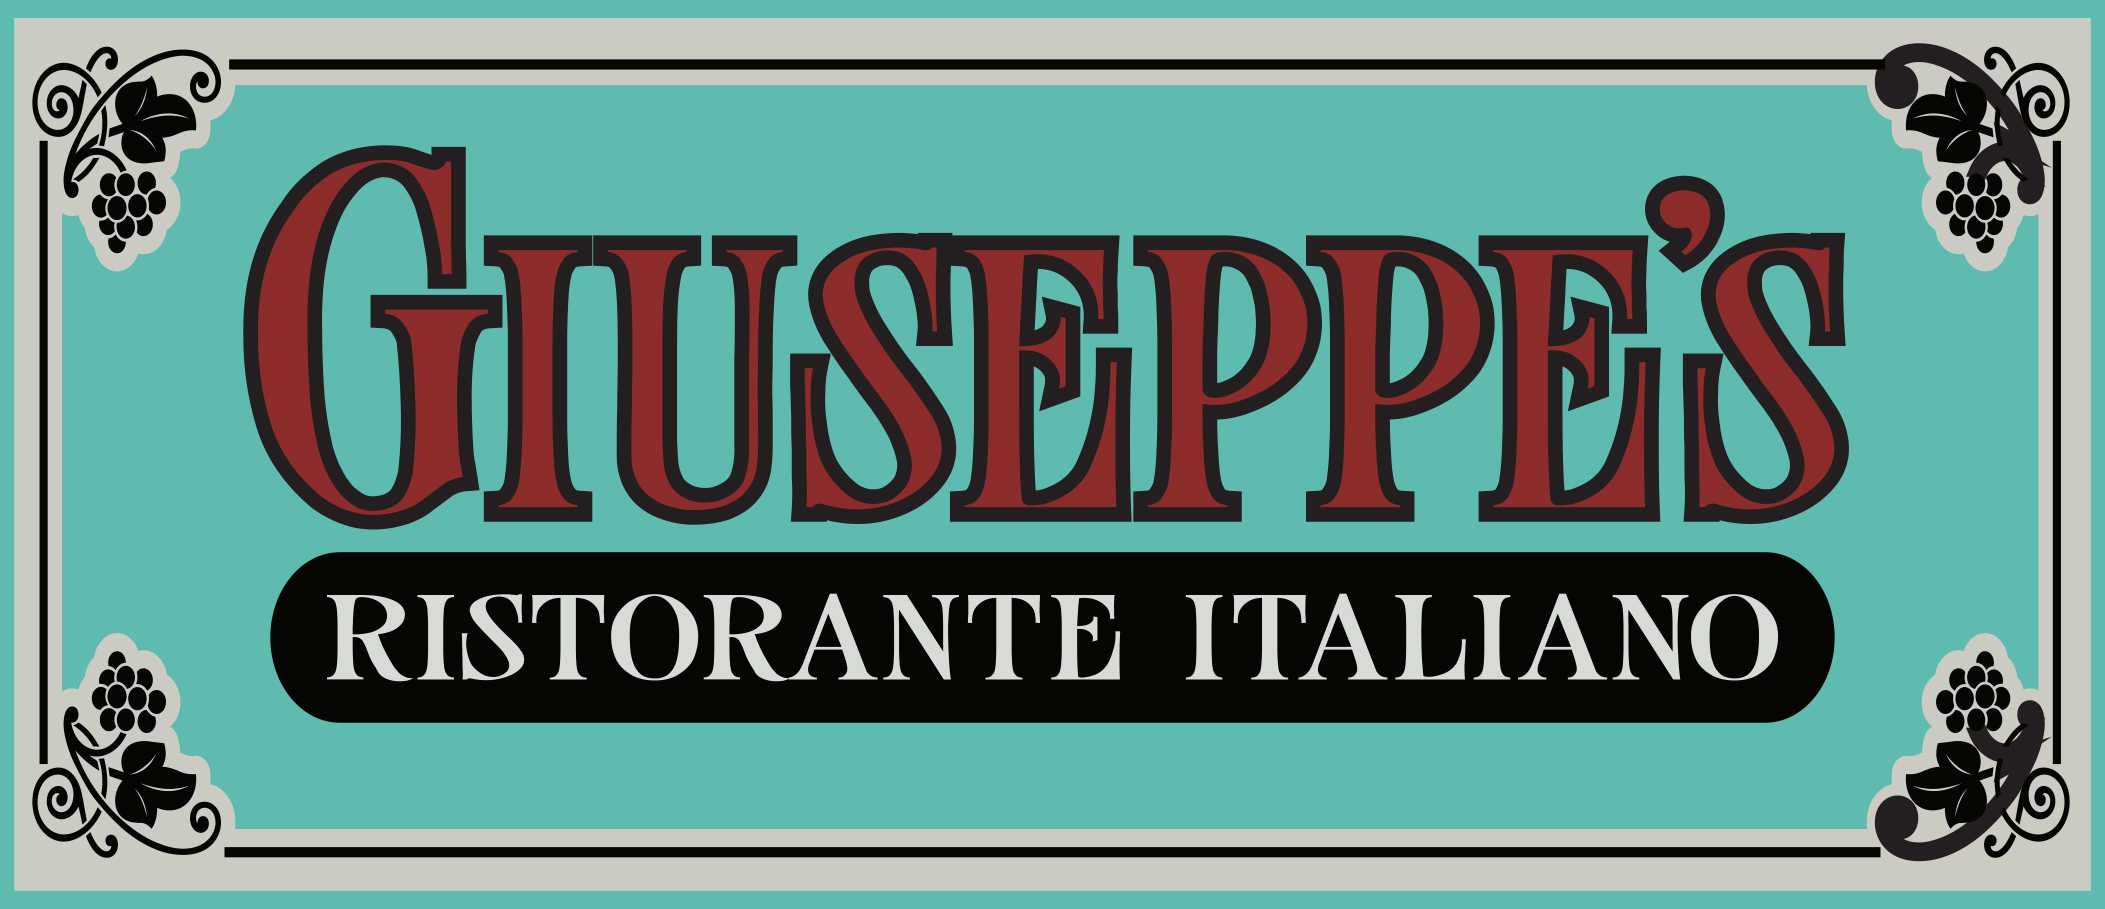 Giuseppe’s Ristorante Italiano logo